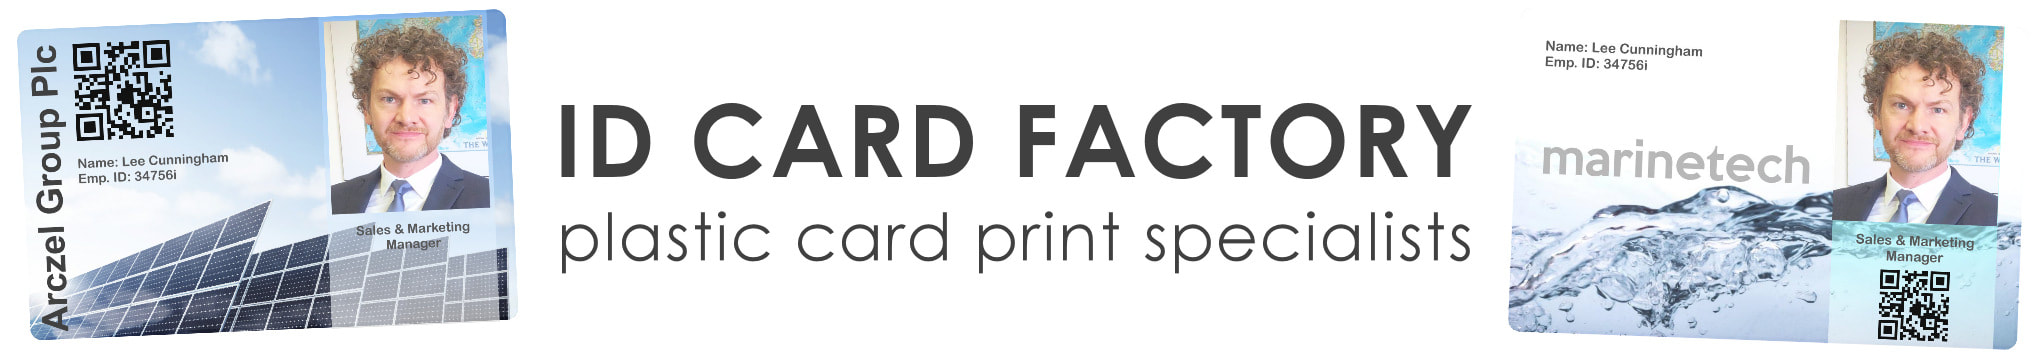 Maidstone ID card printing | staff photo ID cards | company employee ID card print service | Local Identity Card Printing | Custom Design 